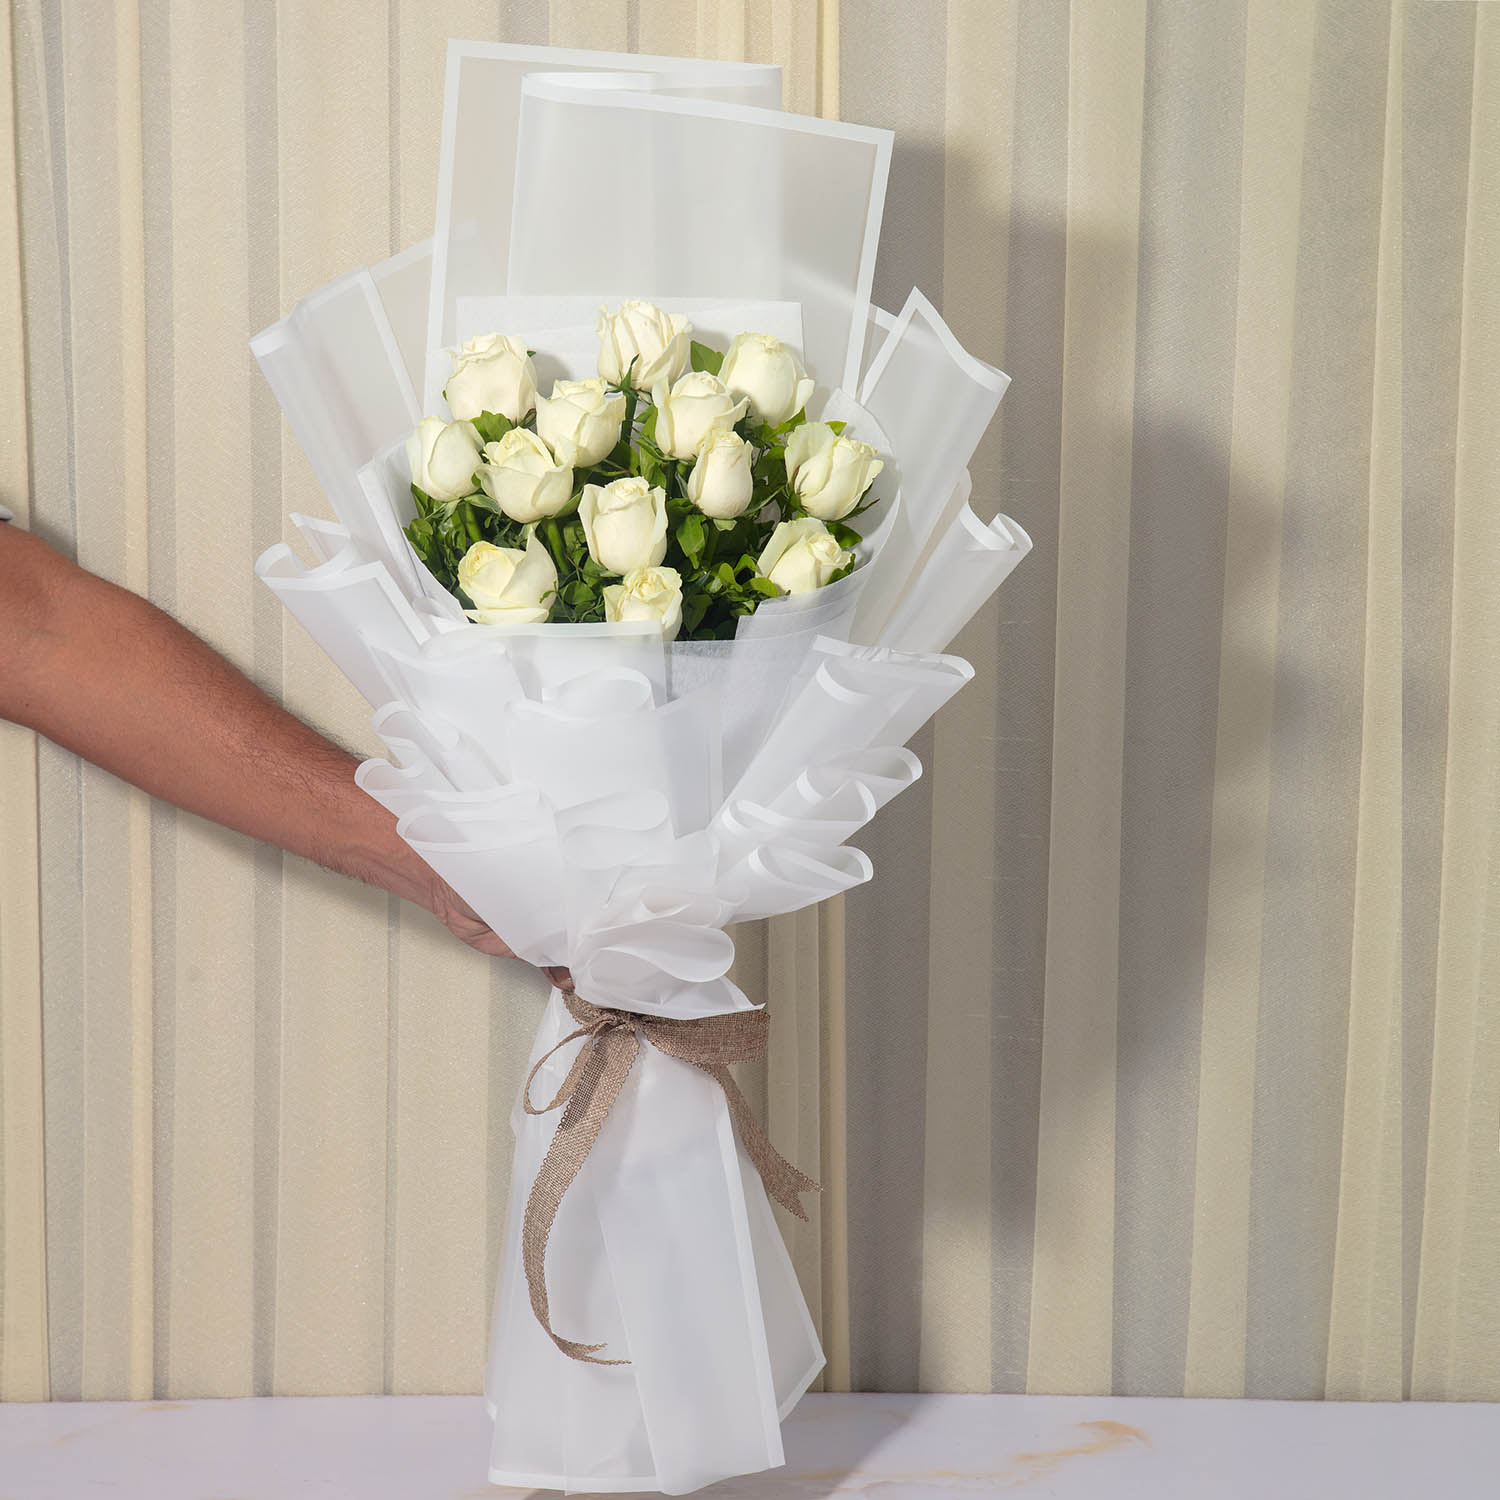 flower bouquet online - white roses